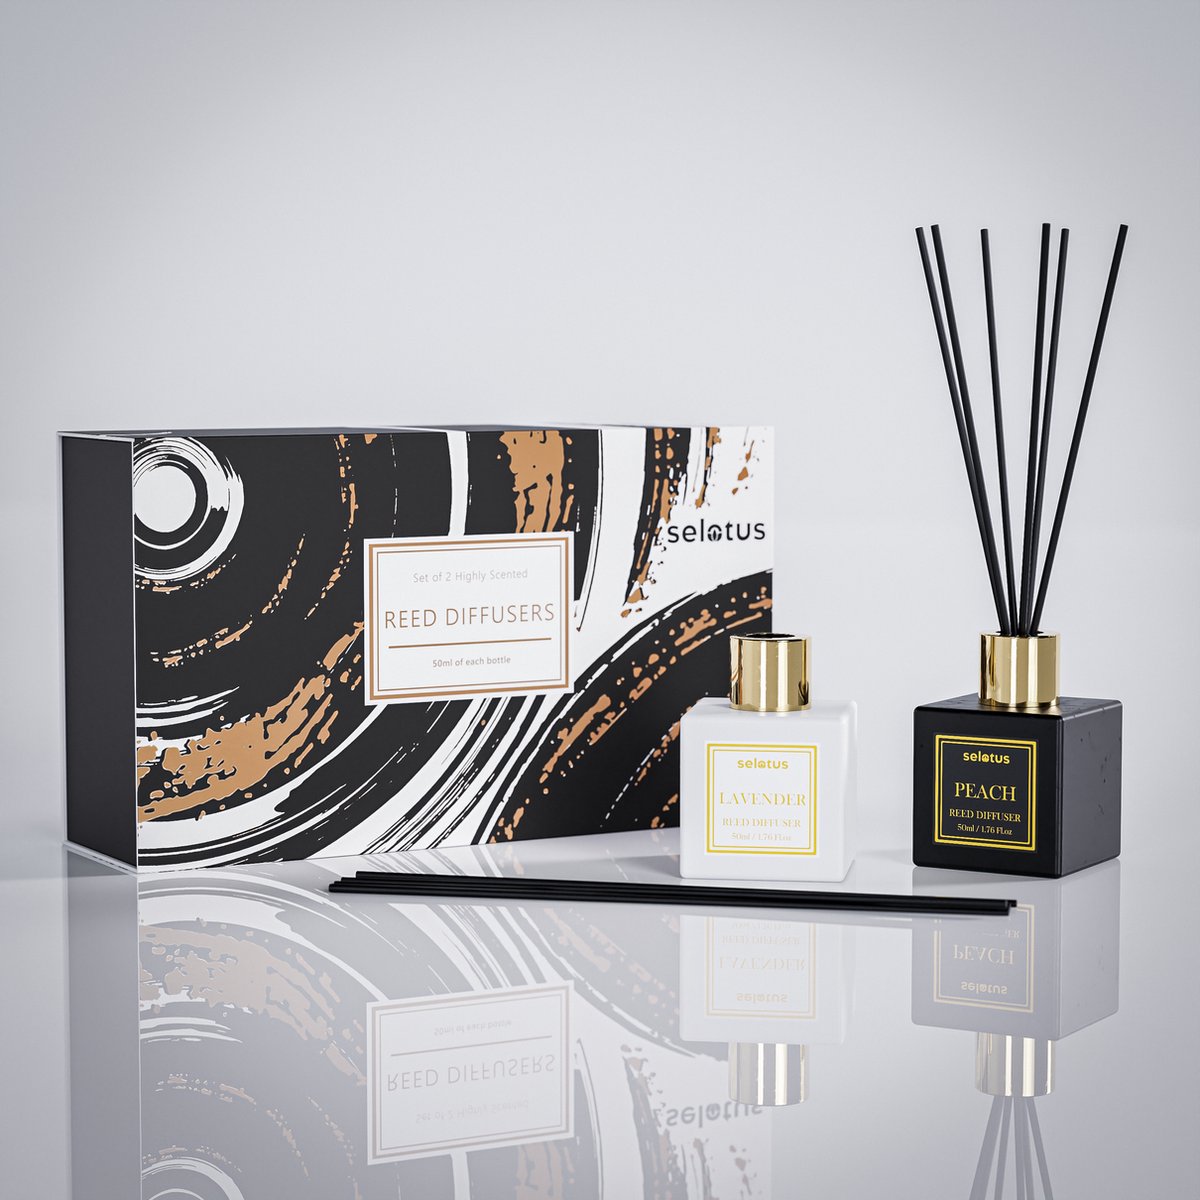 Selotus® – geurstokjes – 100 ML – fragarance sticks – Aroma diffuser - Heerlijke geur – geurversprijders – Lavendel & perzik